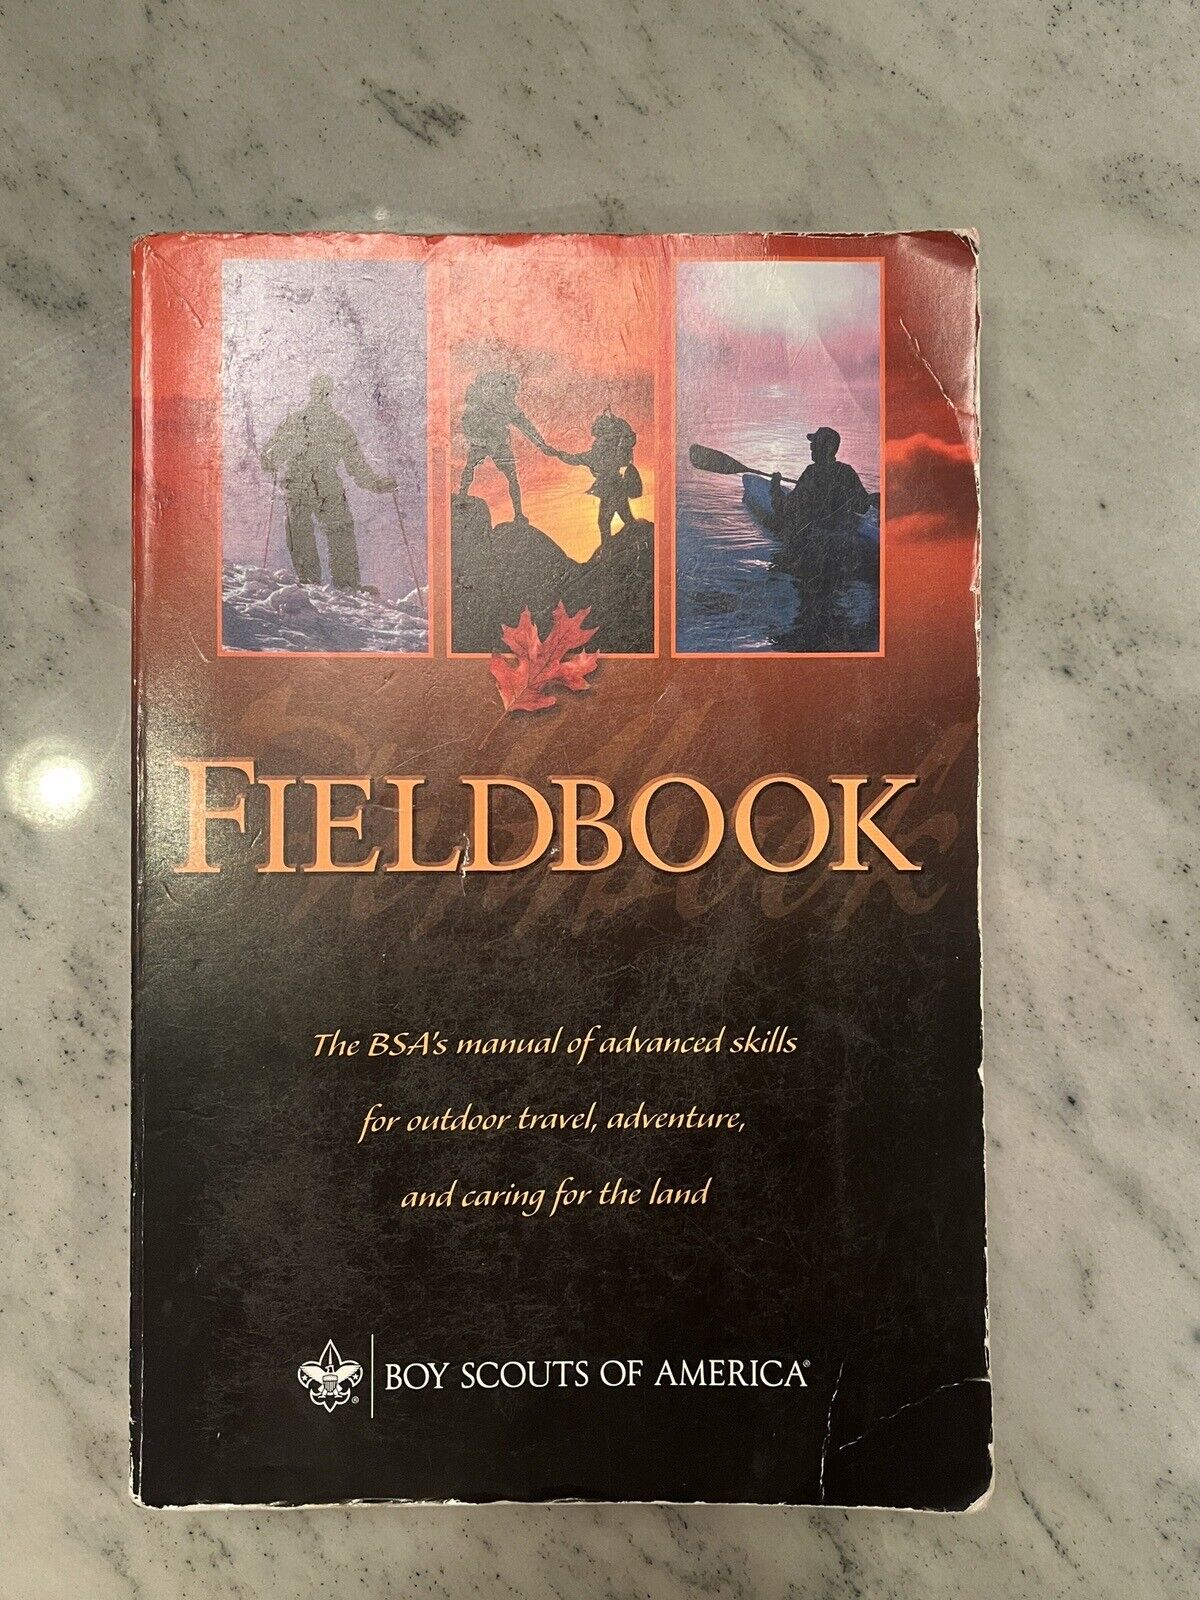 Boy Scouts of America FIELDBOOK 2004 4th Edition Paperback BSA Field Manual